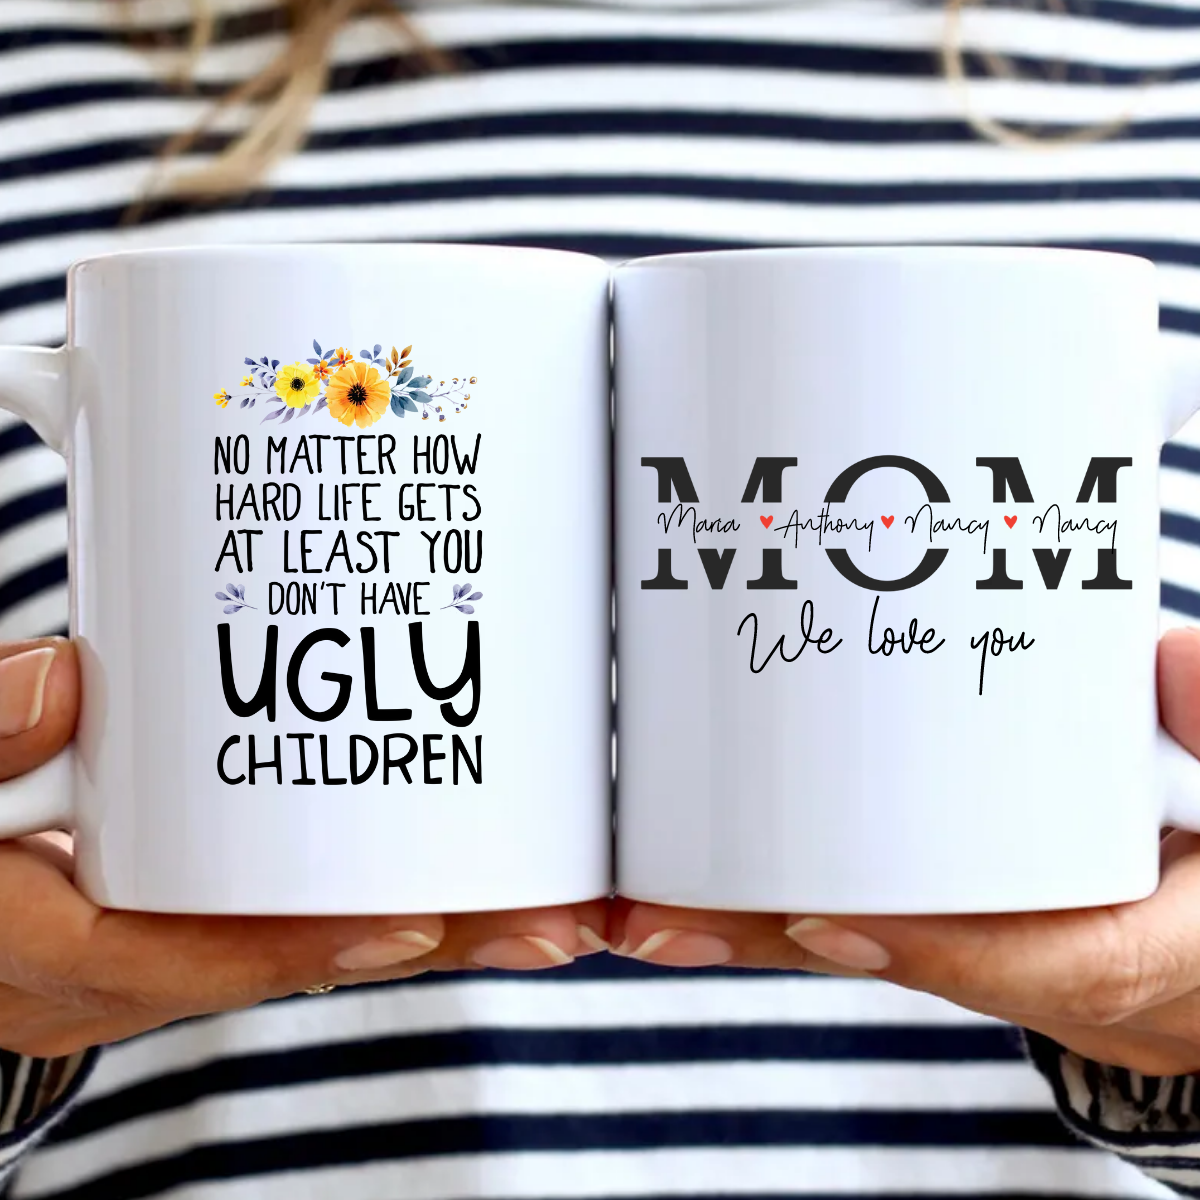 Engraved Mom Tumbler With Kids Names, Mom Travel Mug